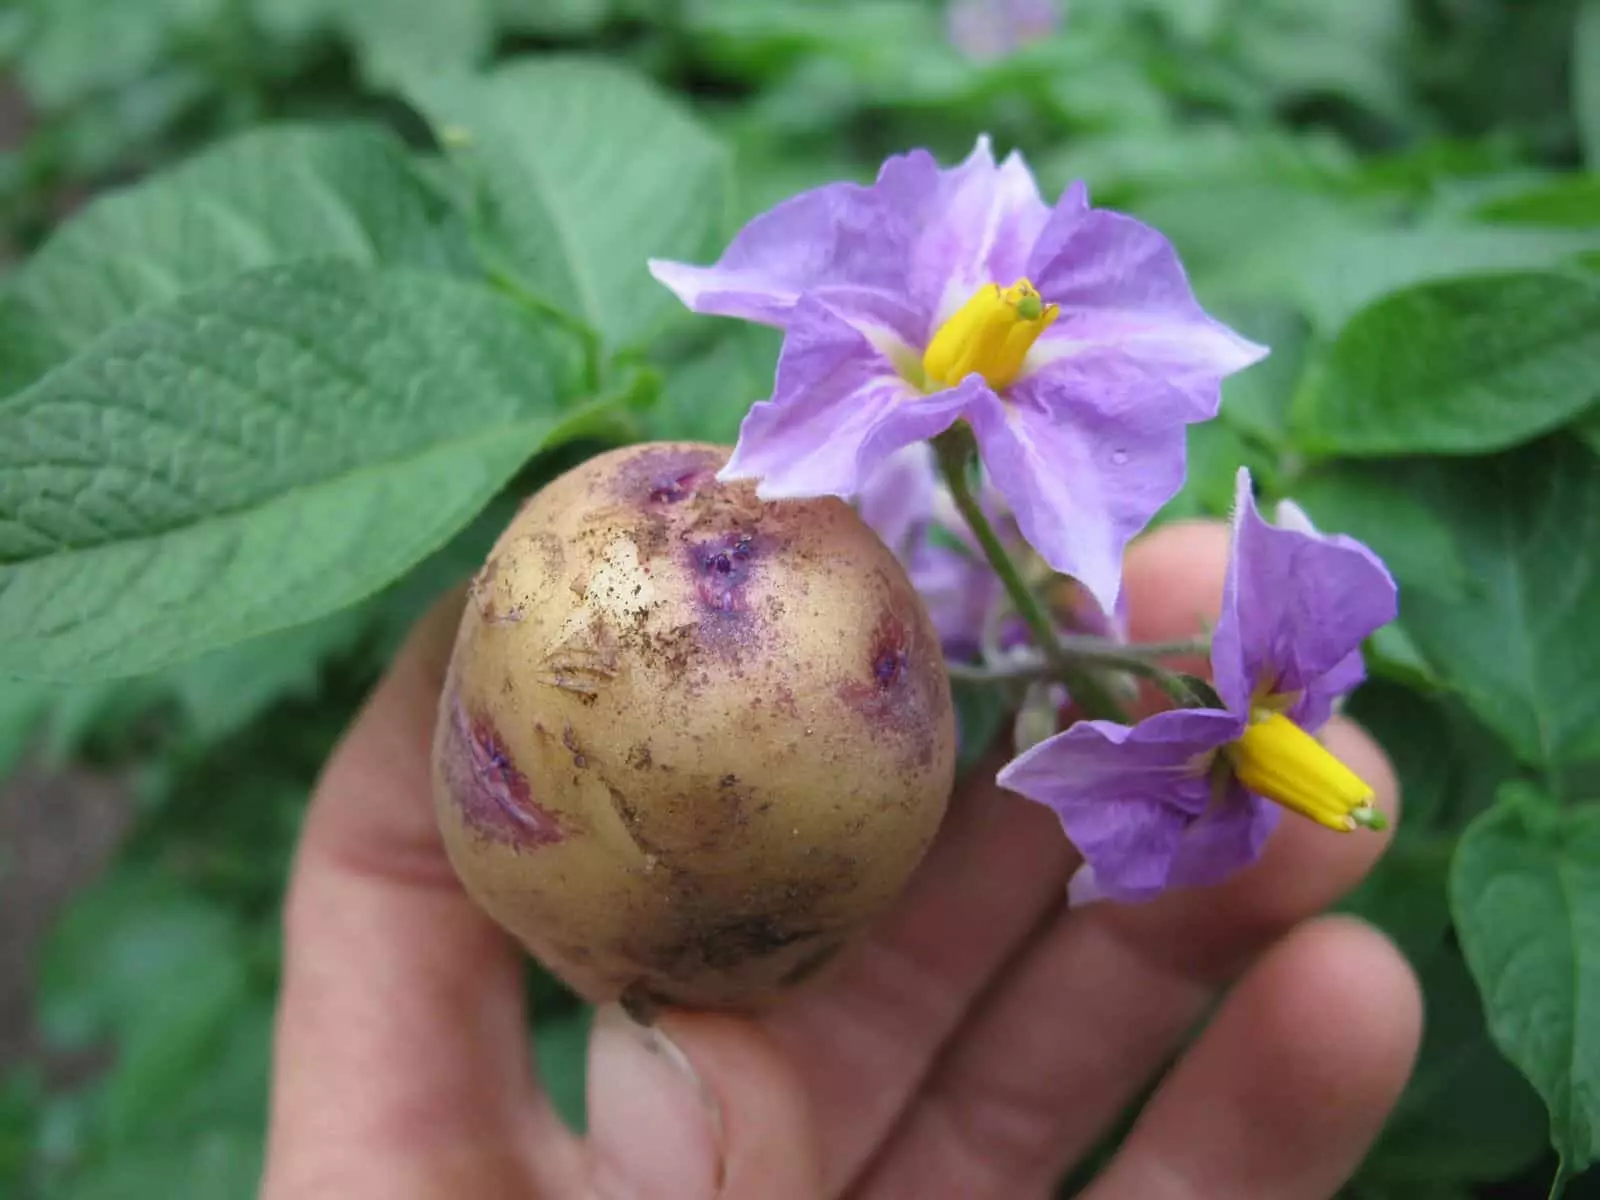 Potato laboys